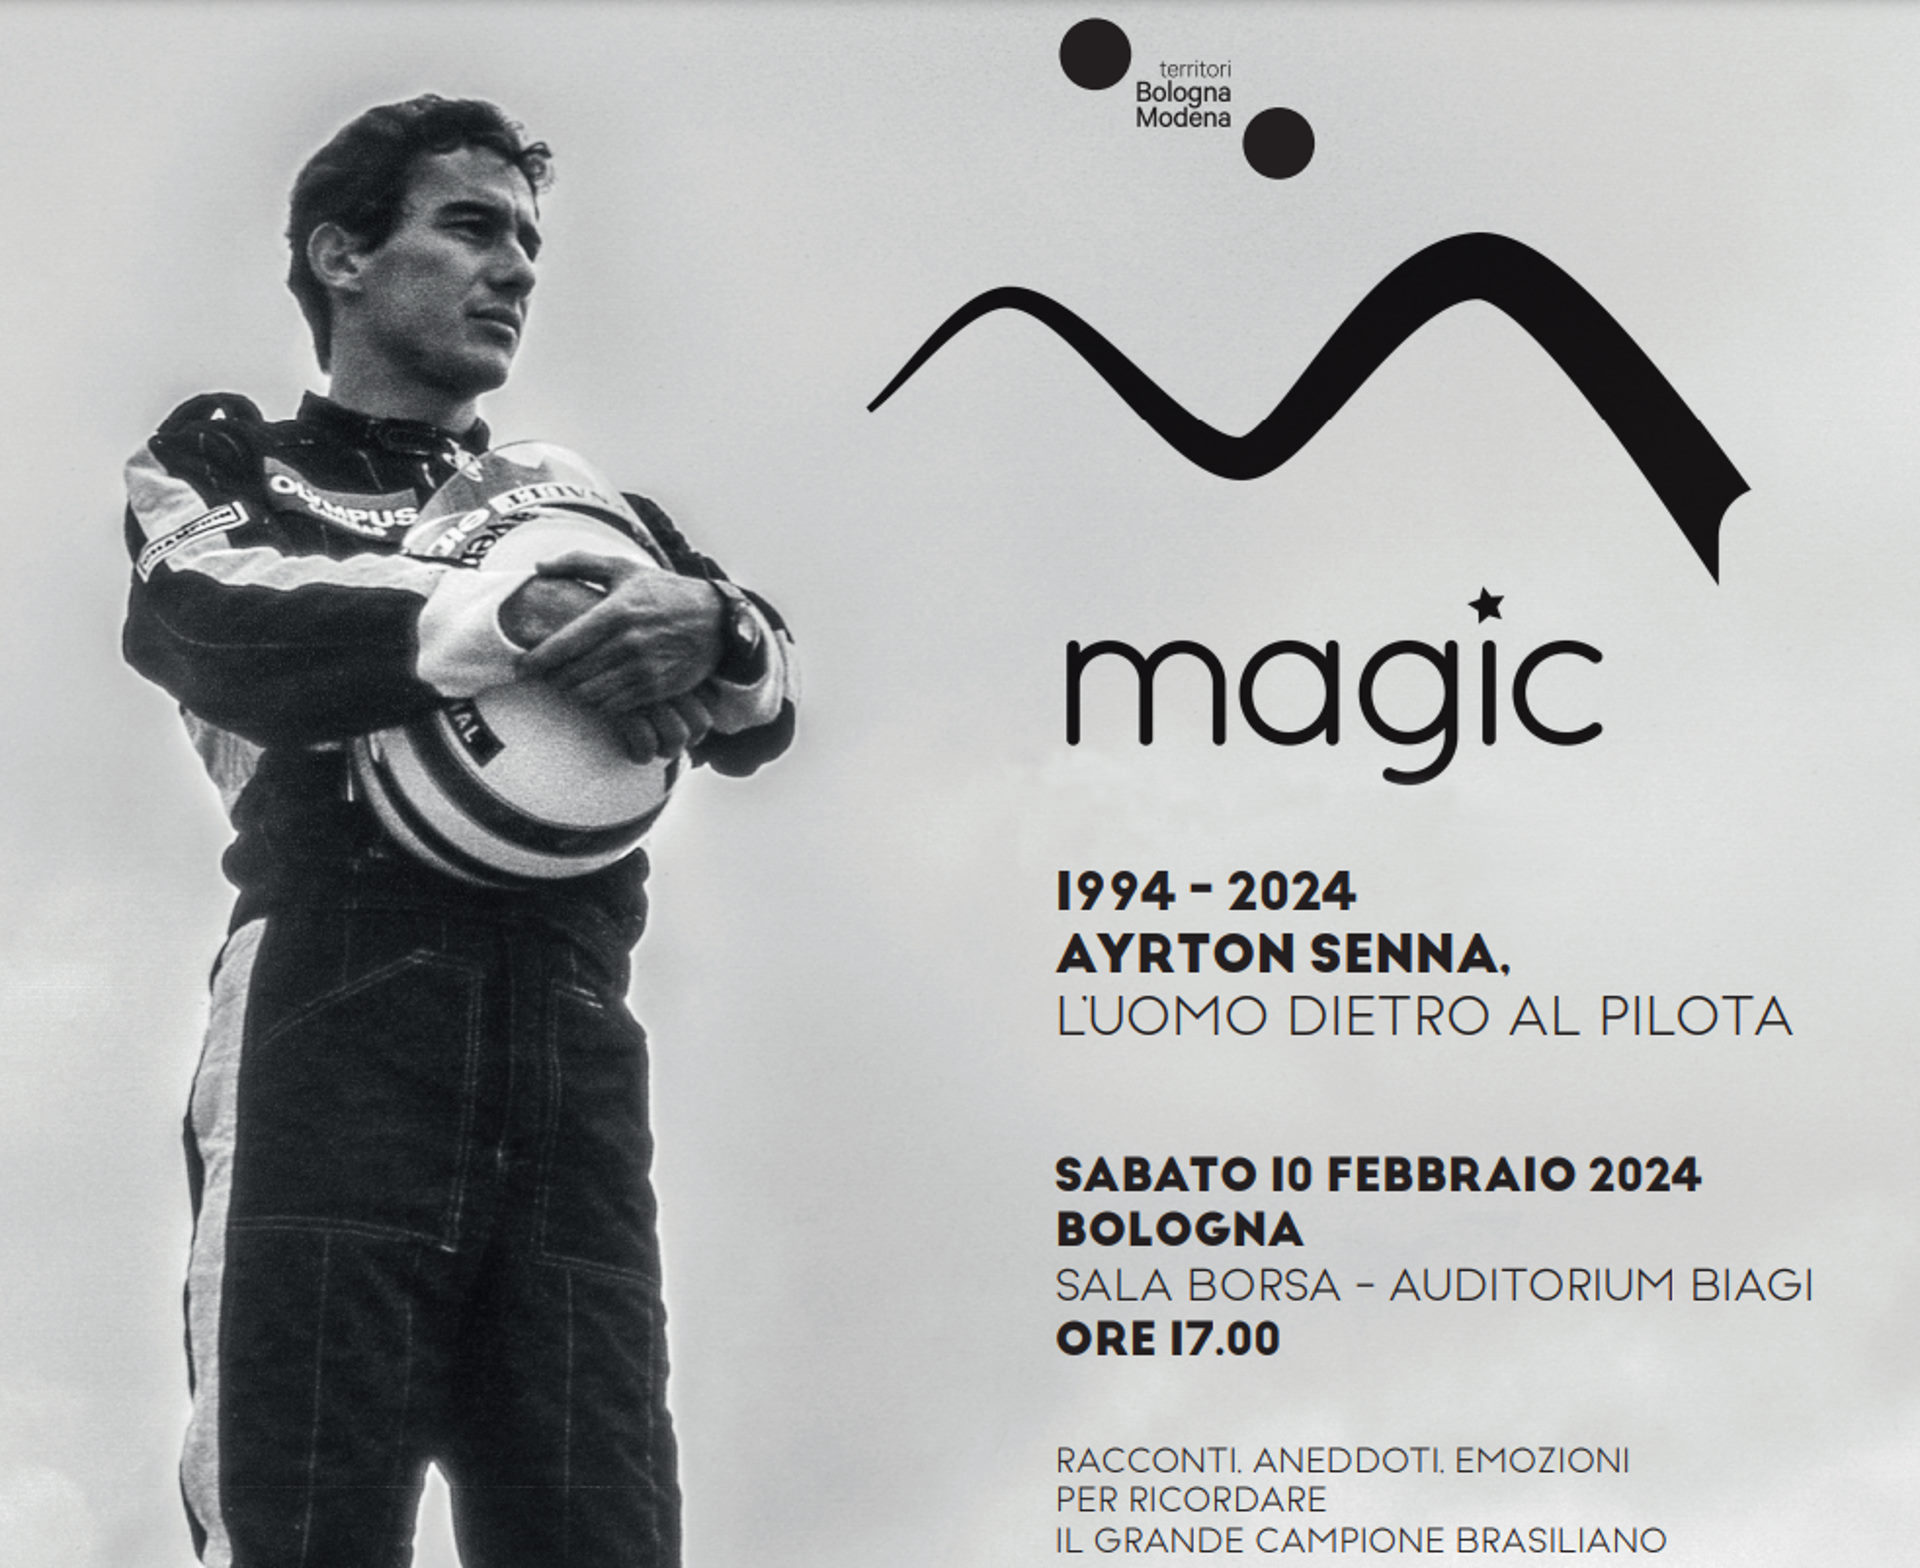 Sabato 10 febbraio 2024, Bologna Sala Borsa - auditorium Biagi ore 17.00